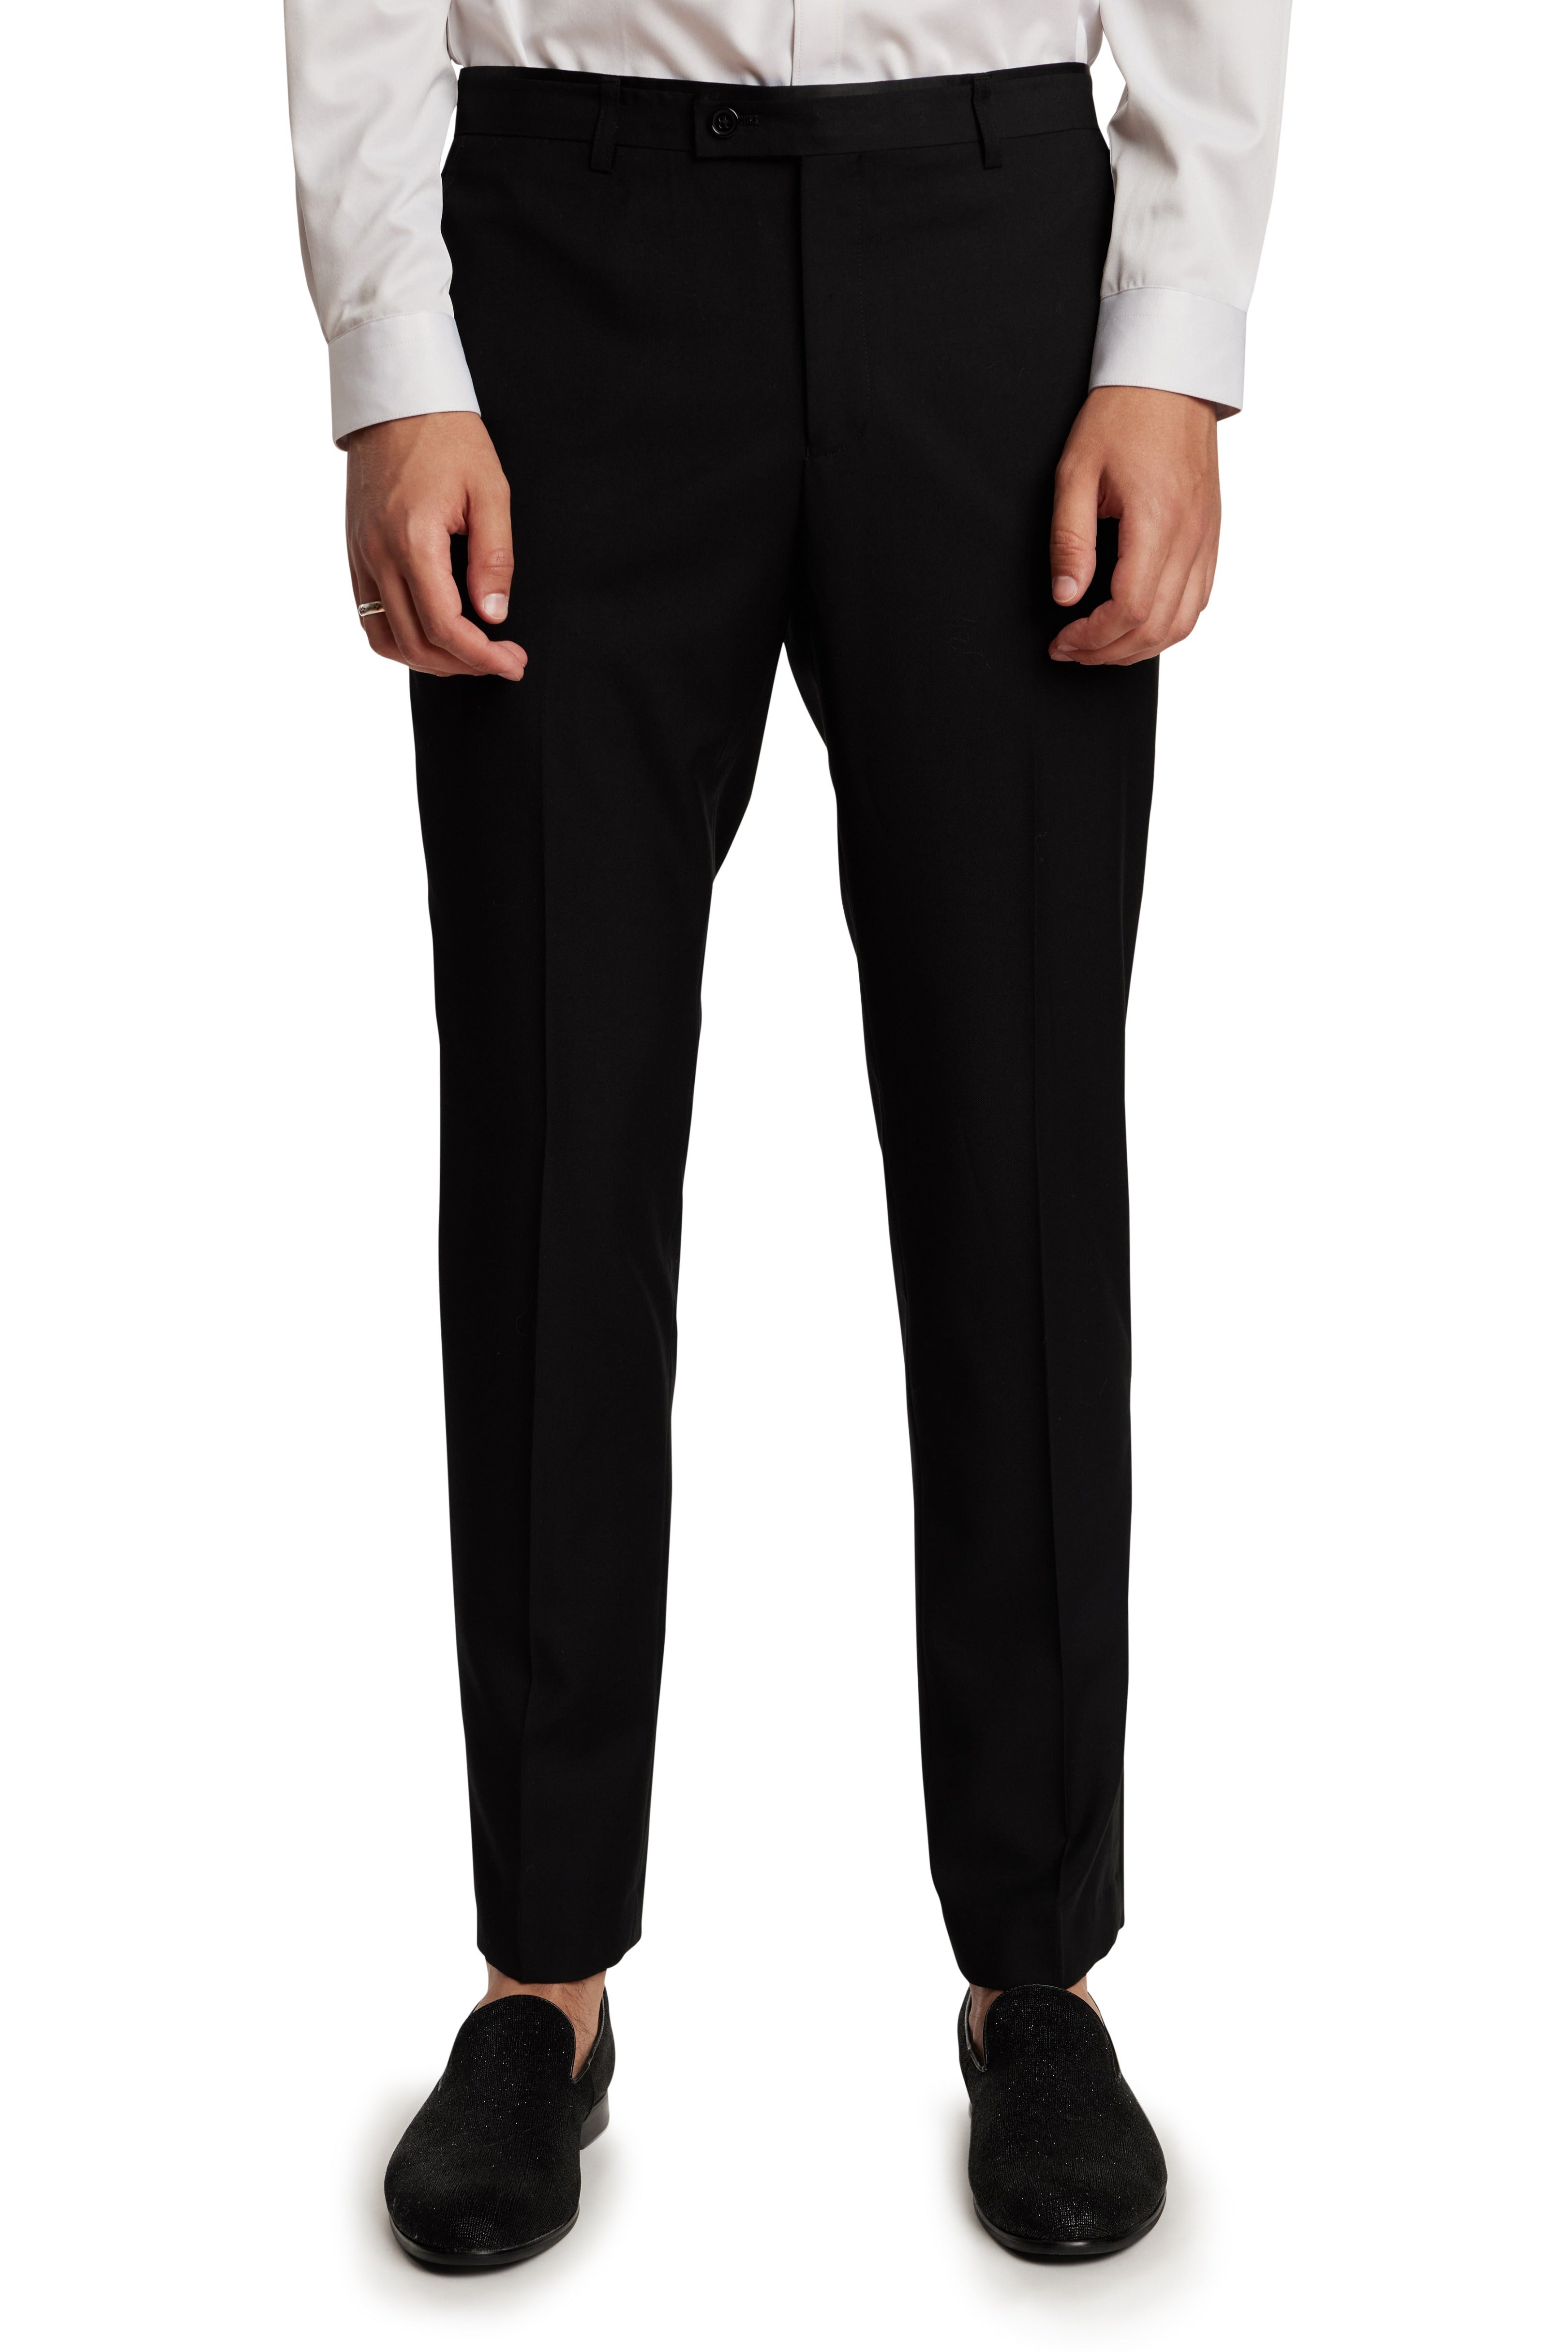 Sloane Tuxedo Pants - Slim - Black